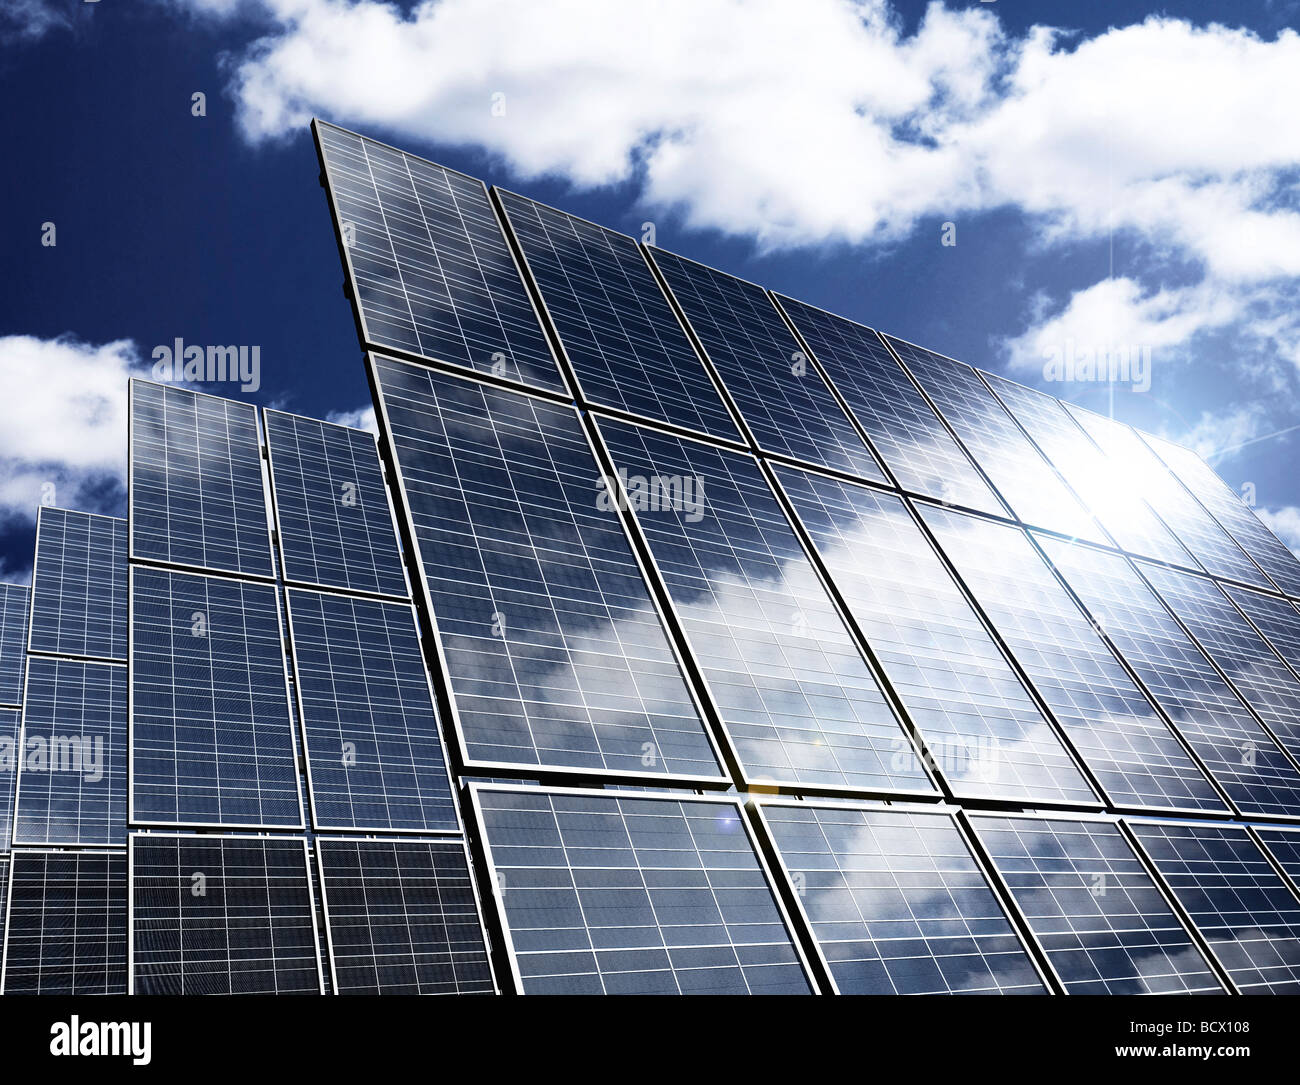 Solar panels under blue sky Stock Photo